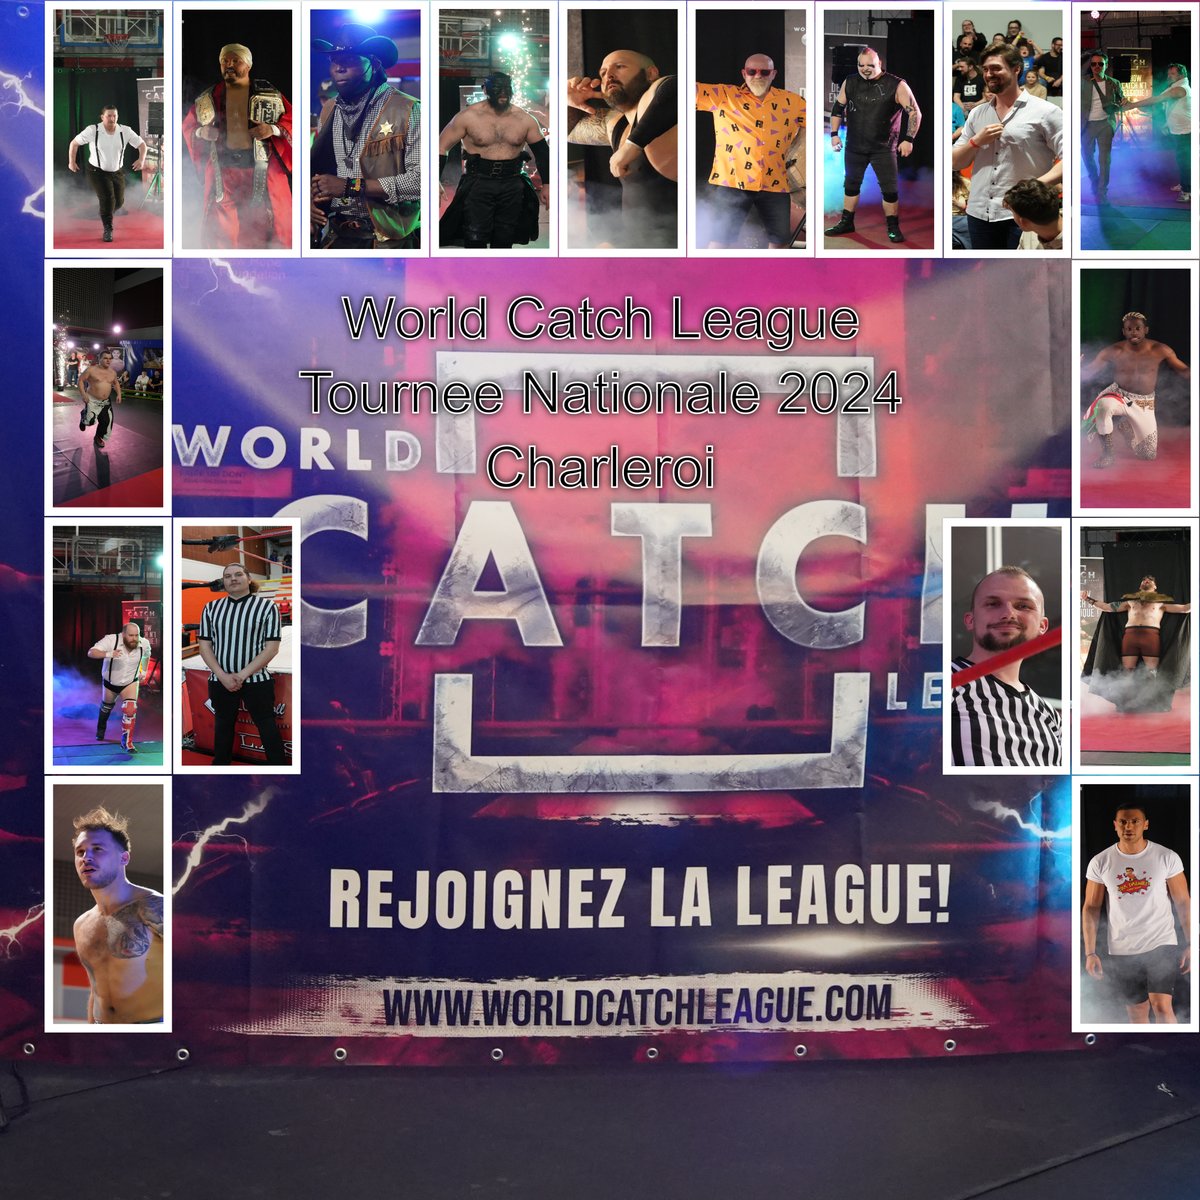 WCL - Tournee Nationale 2024 - Charleroi : Divers @wcl_wrestling #Belgie #Belgique #Belgium #Catch #Charleroi #CombatDeLutte #Lutte #TourneeNationale #TourneeNationale2024 #WCL #WorldCatchLeague #Wrestling #WrestlingMatch  - flickr.com/photos/1516398…